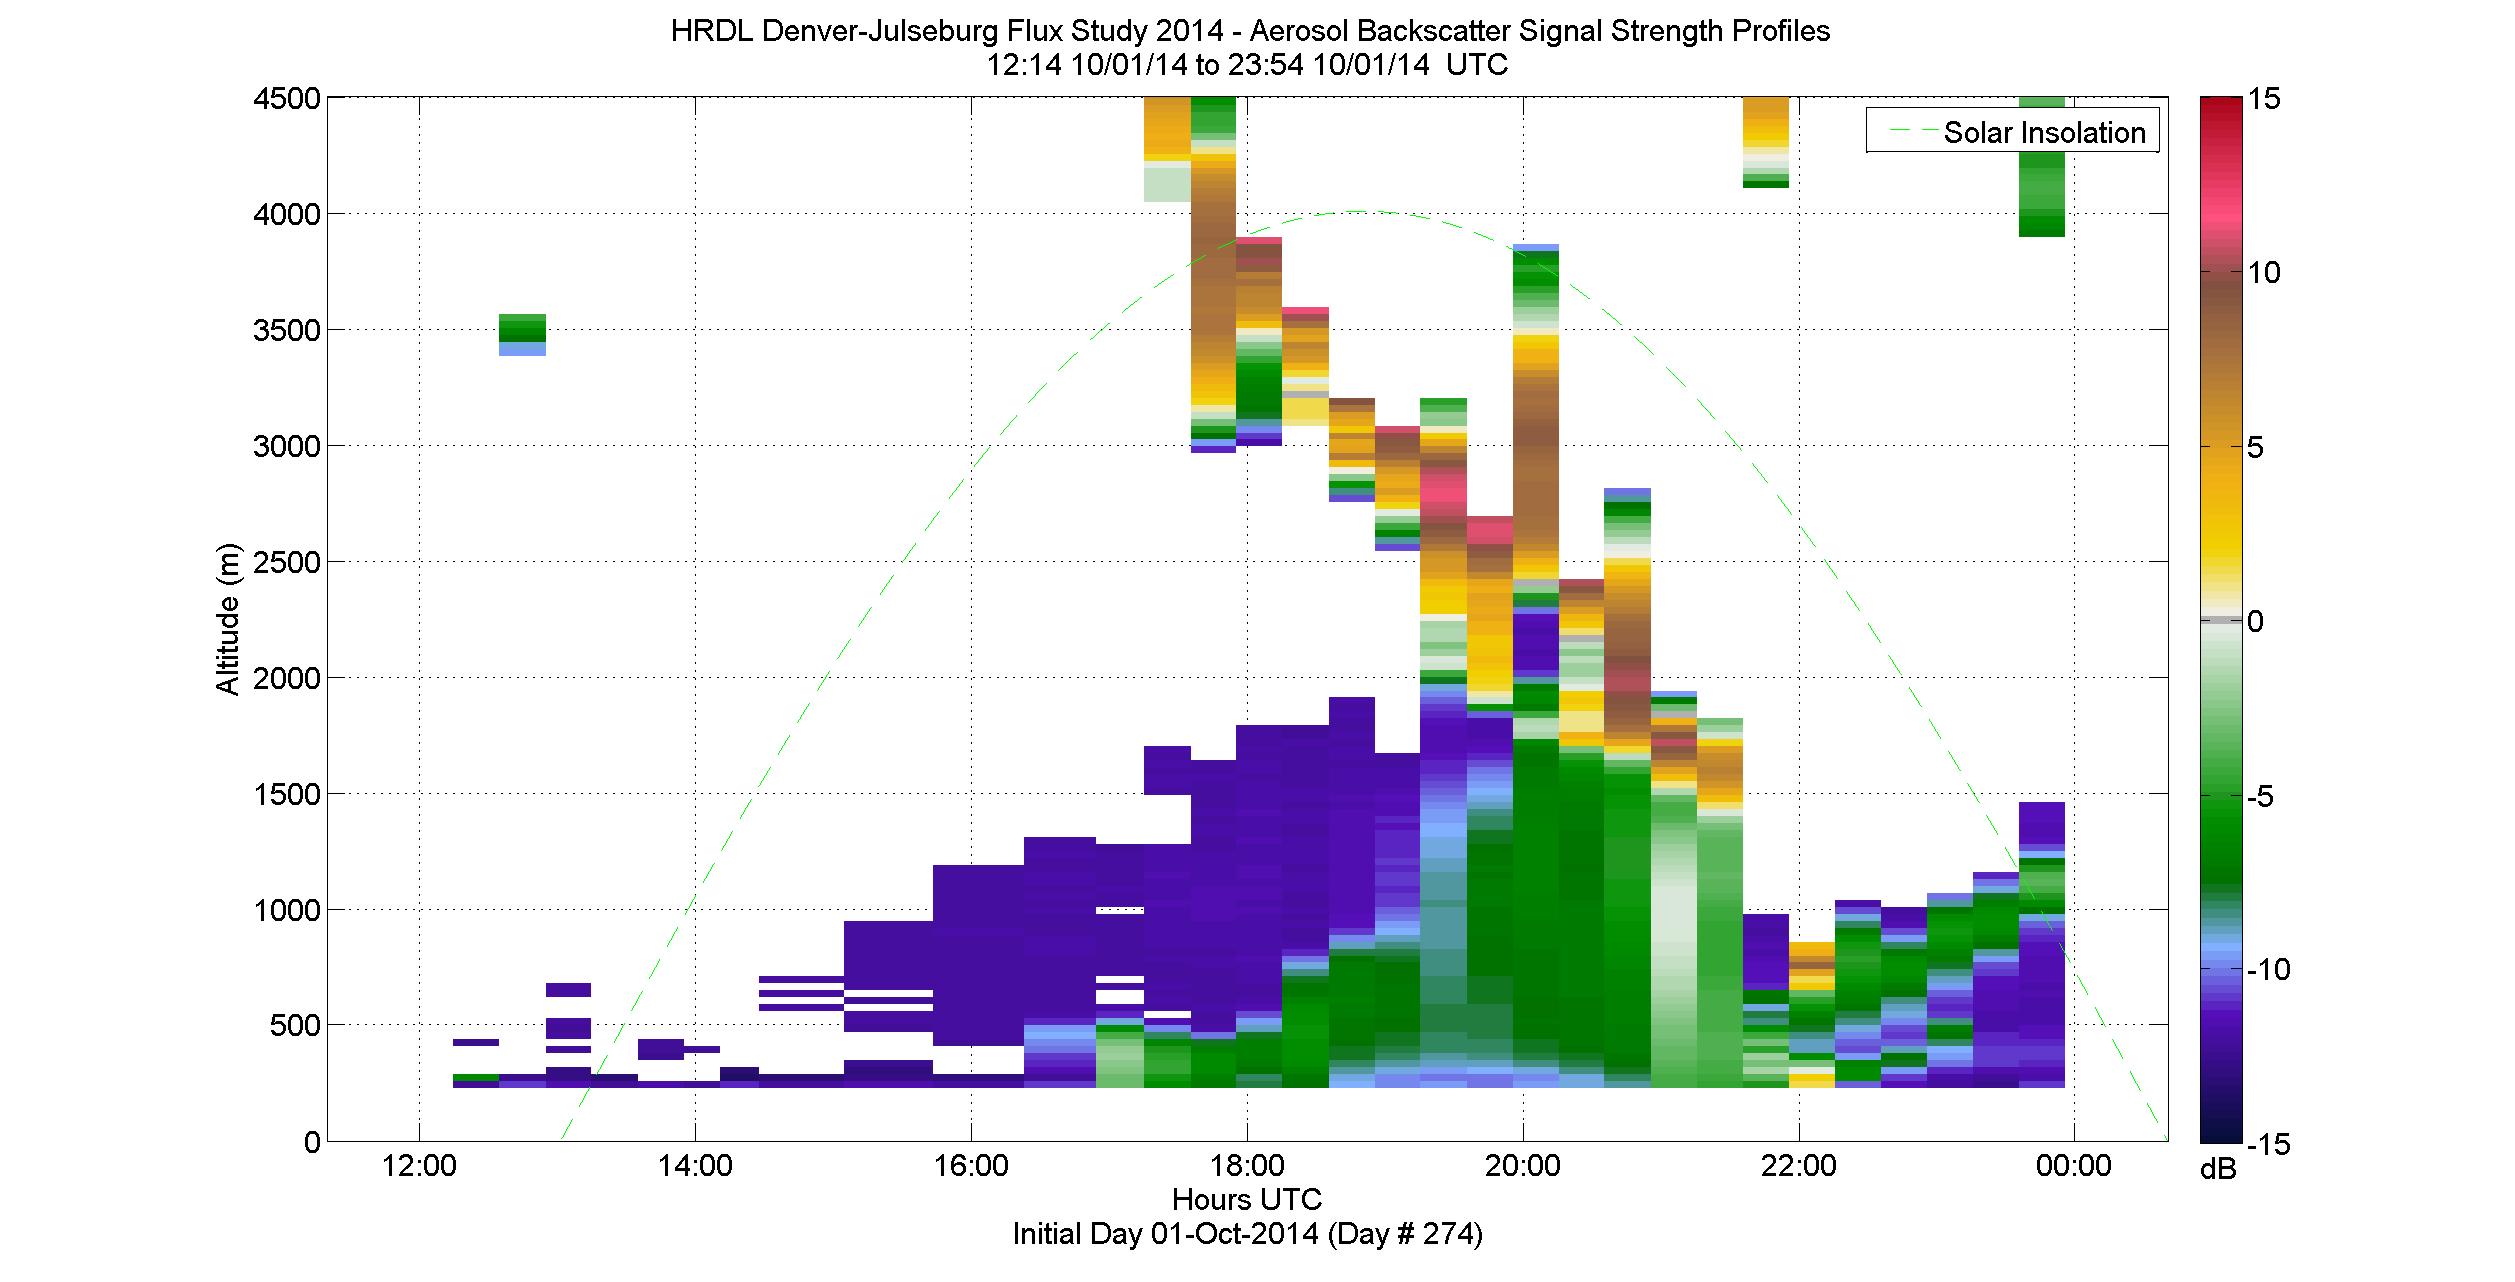 HRDL vertical intensity profile - October 1 pm